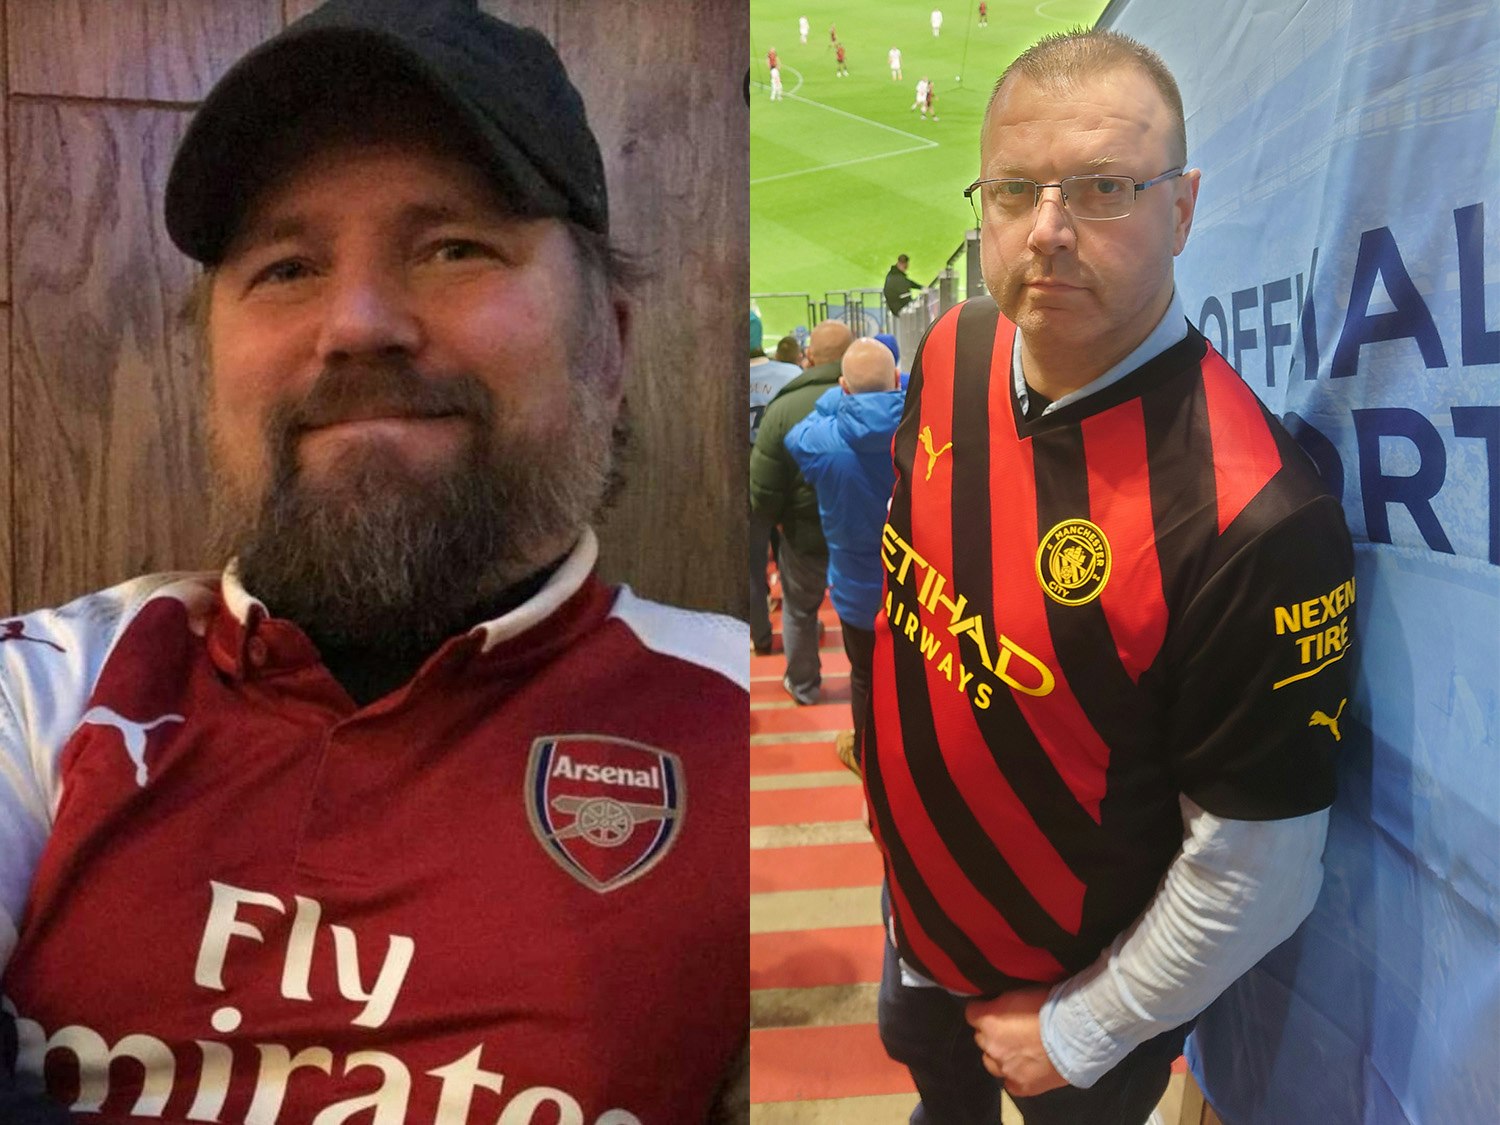 Supporterne Ronny Madsen (Arsenal) og Ole Fuglestad (City)